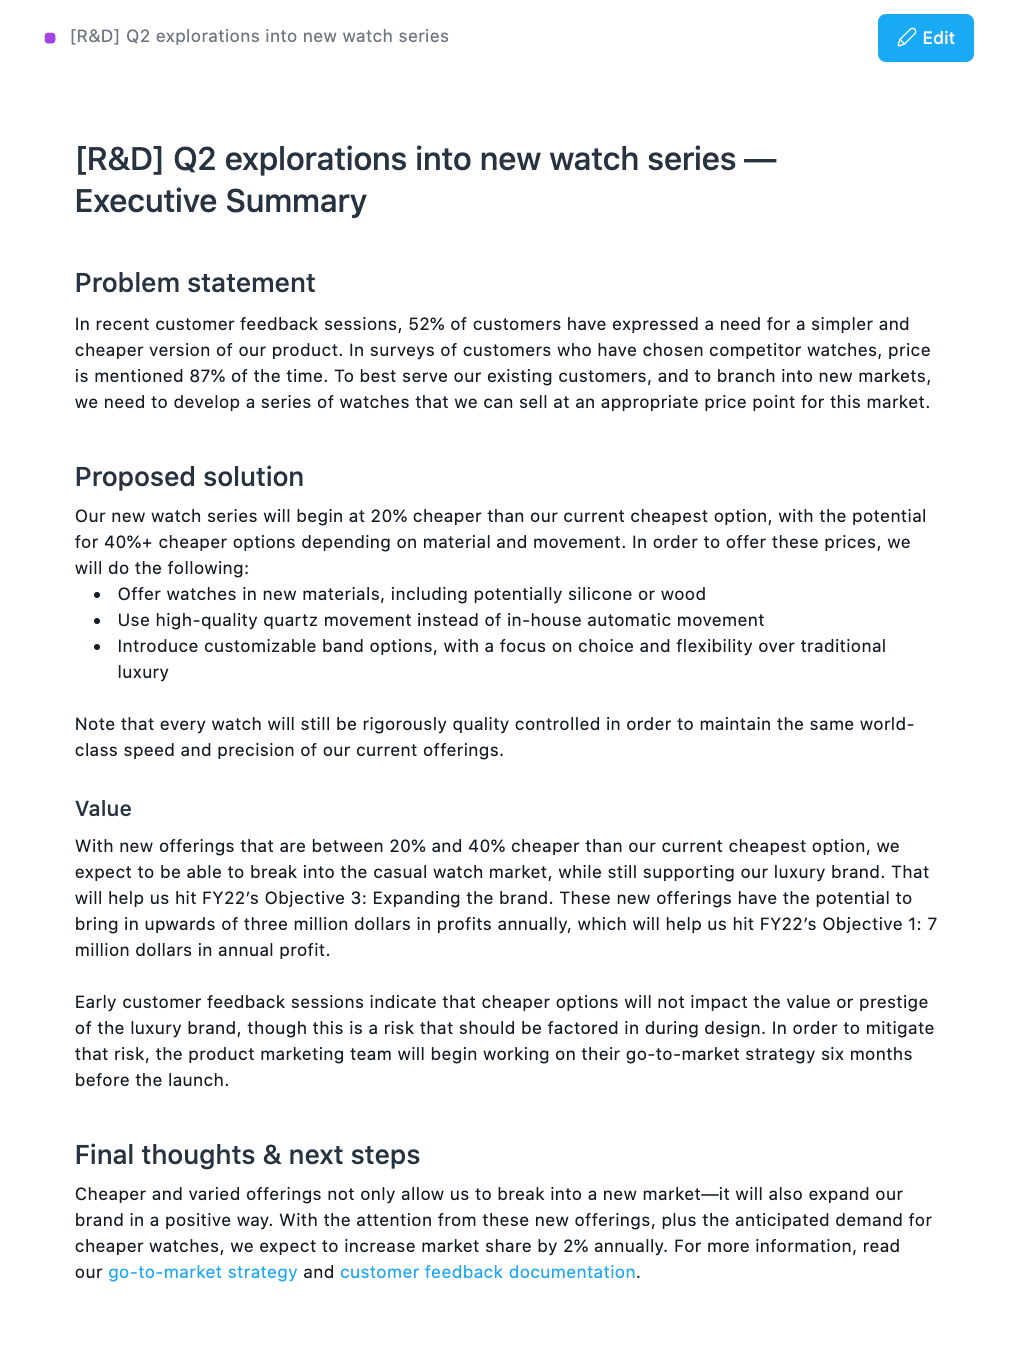 Contoh executive summary di Lister